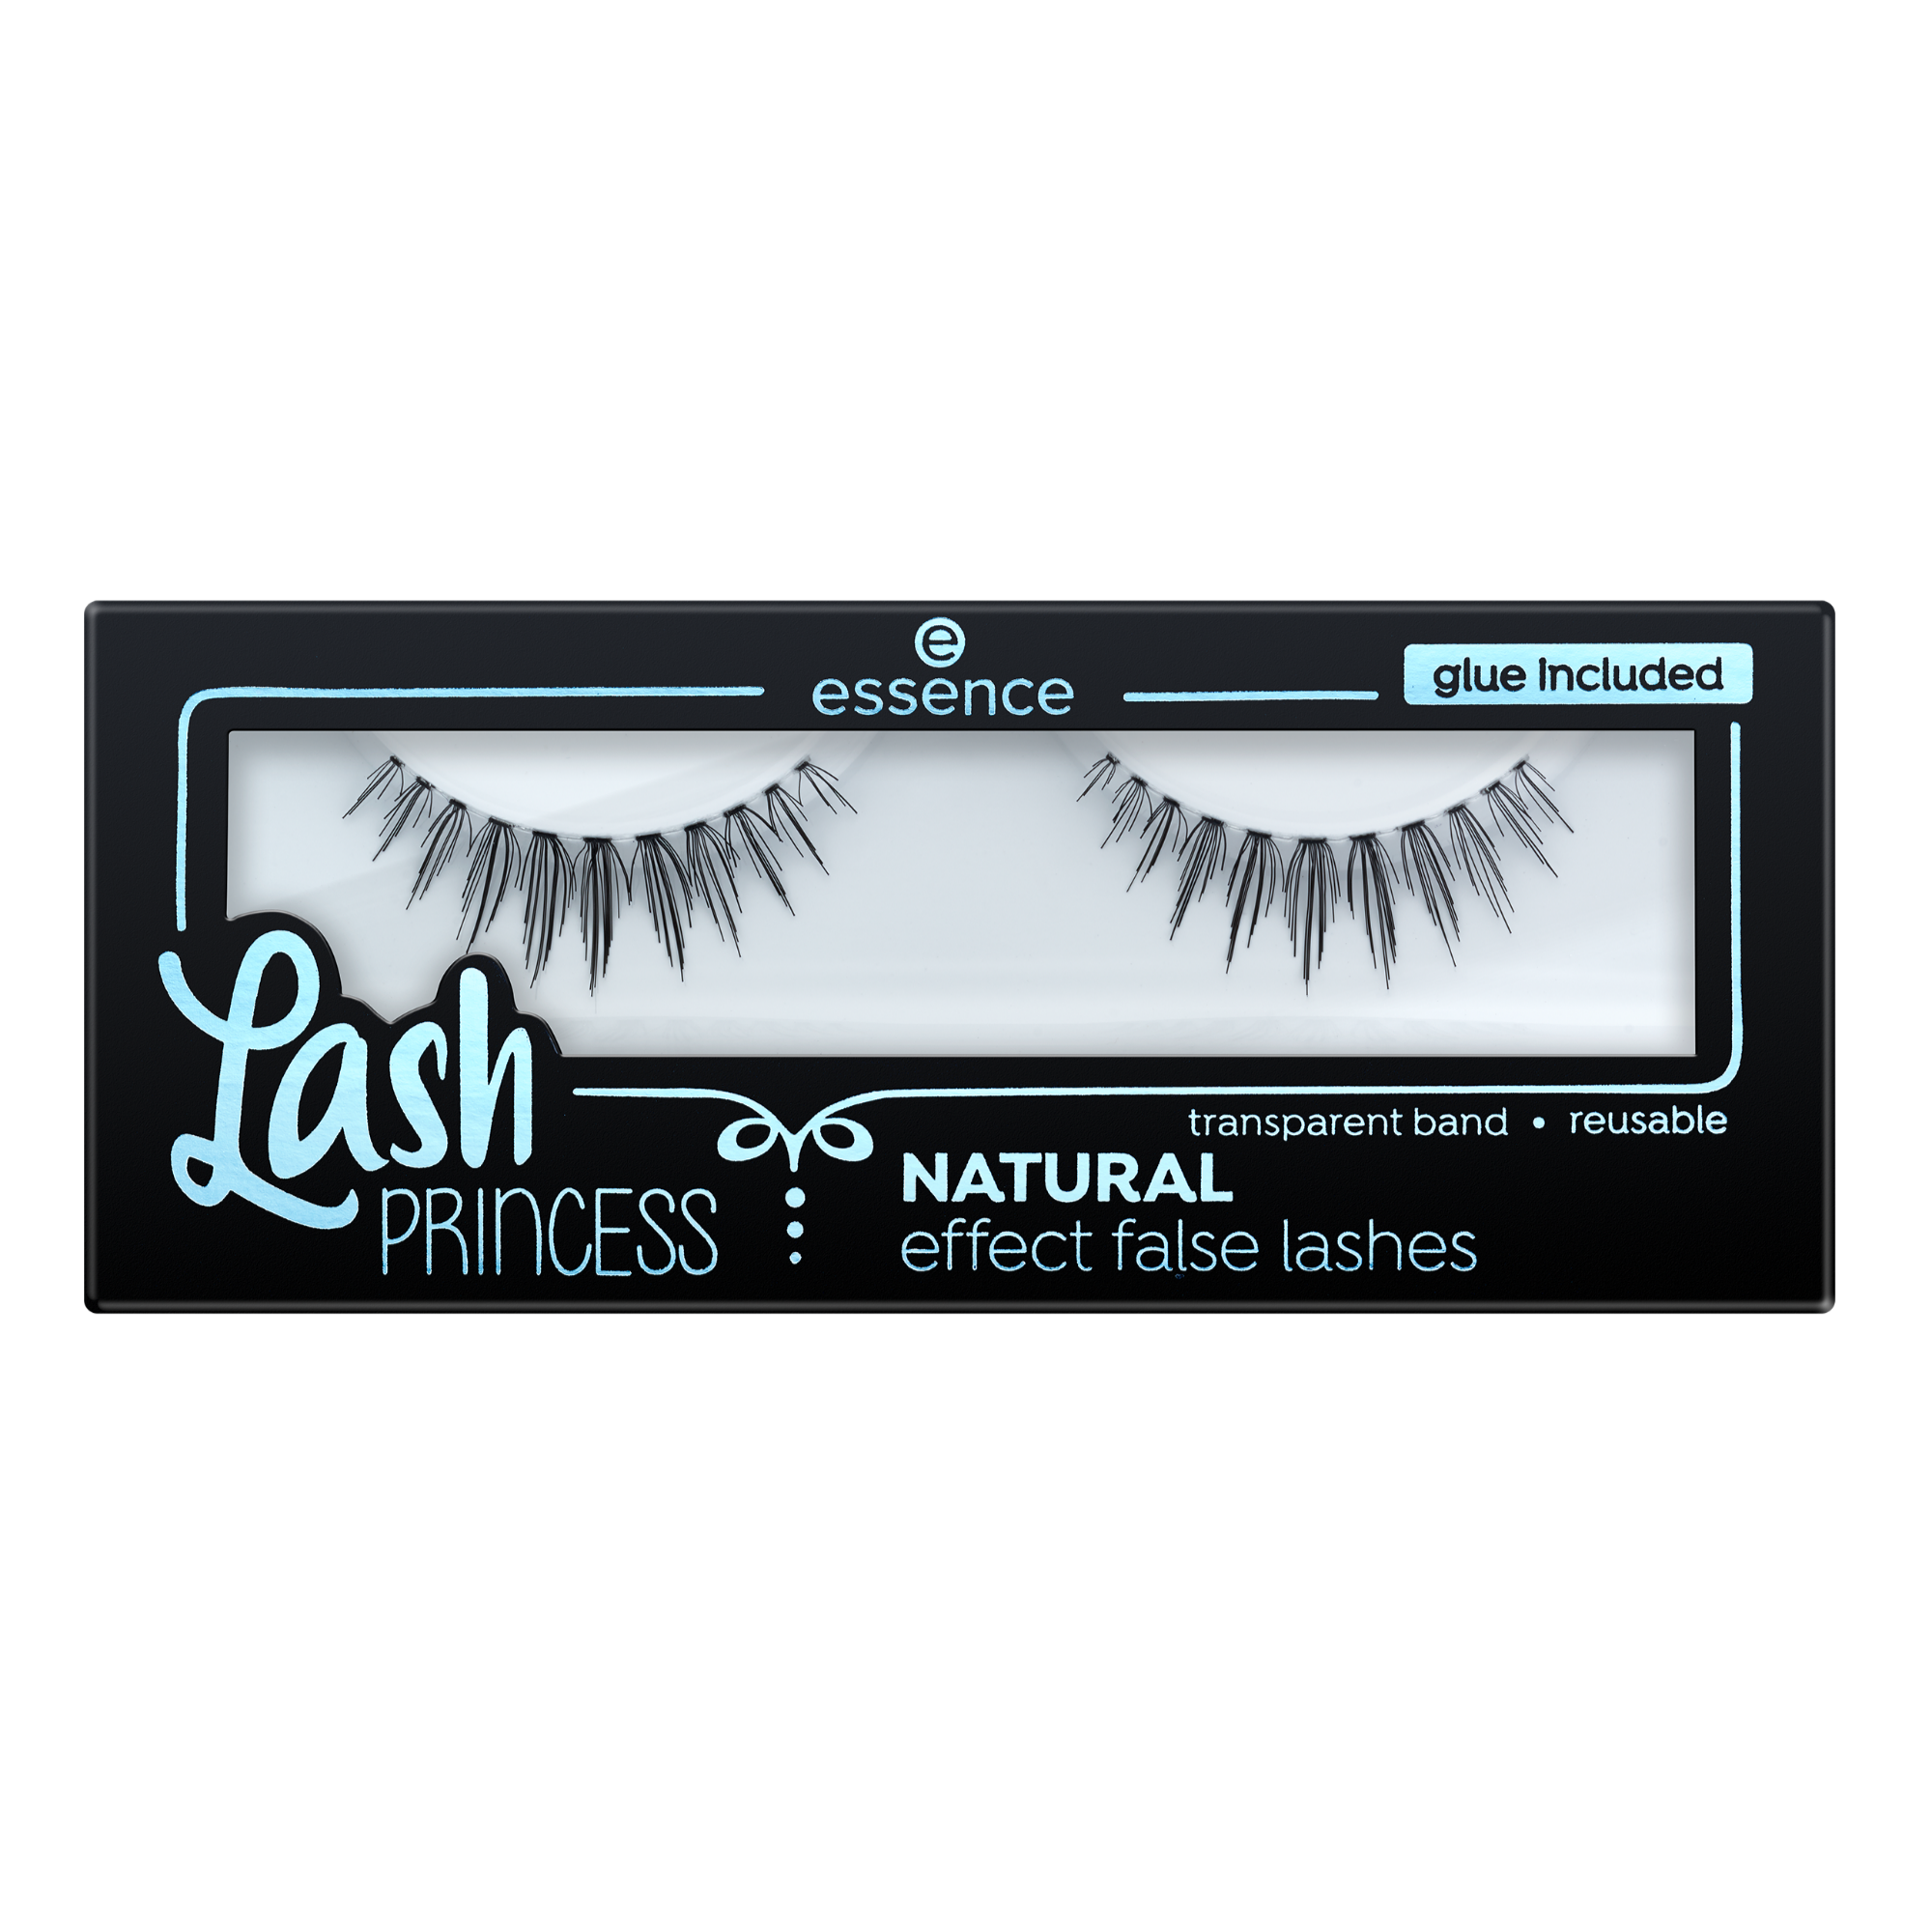 Lash PRINCESS NATURAL effect false lashes